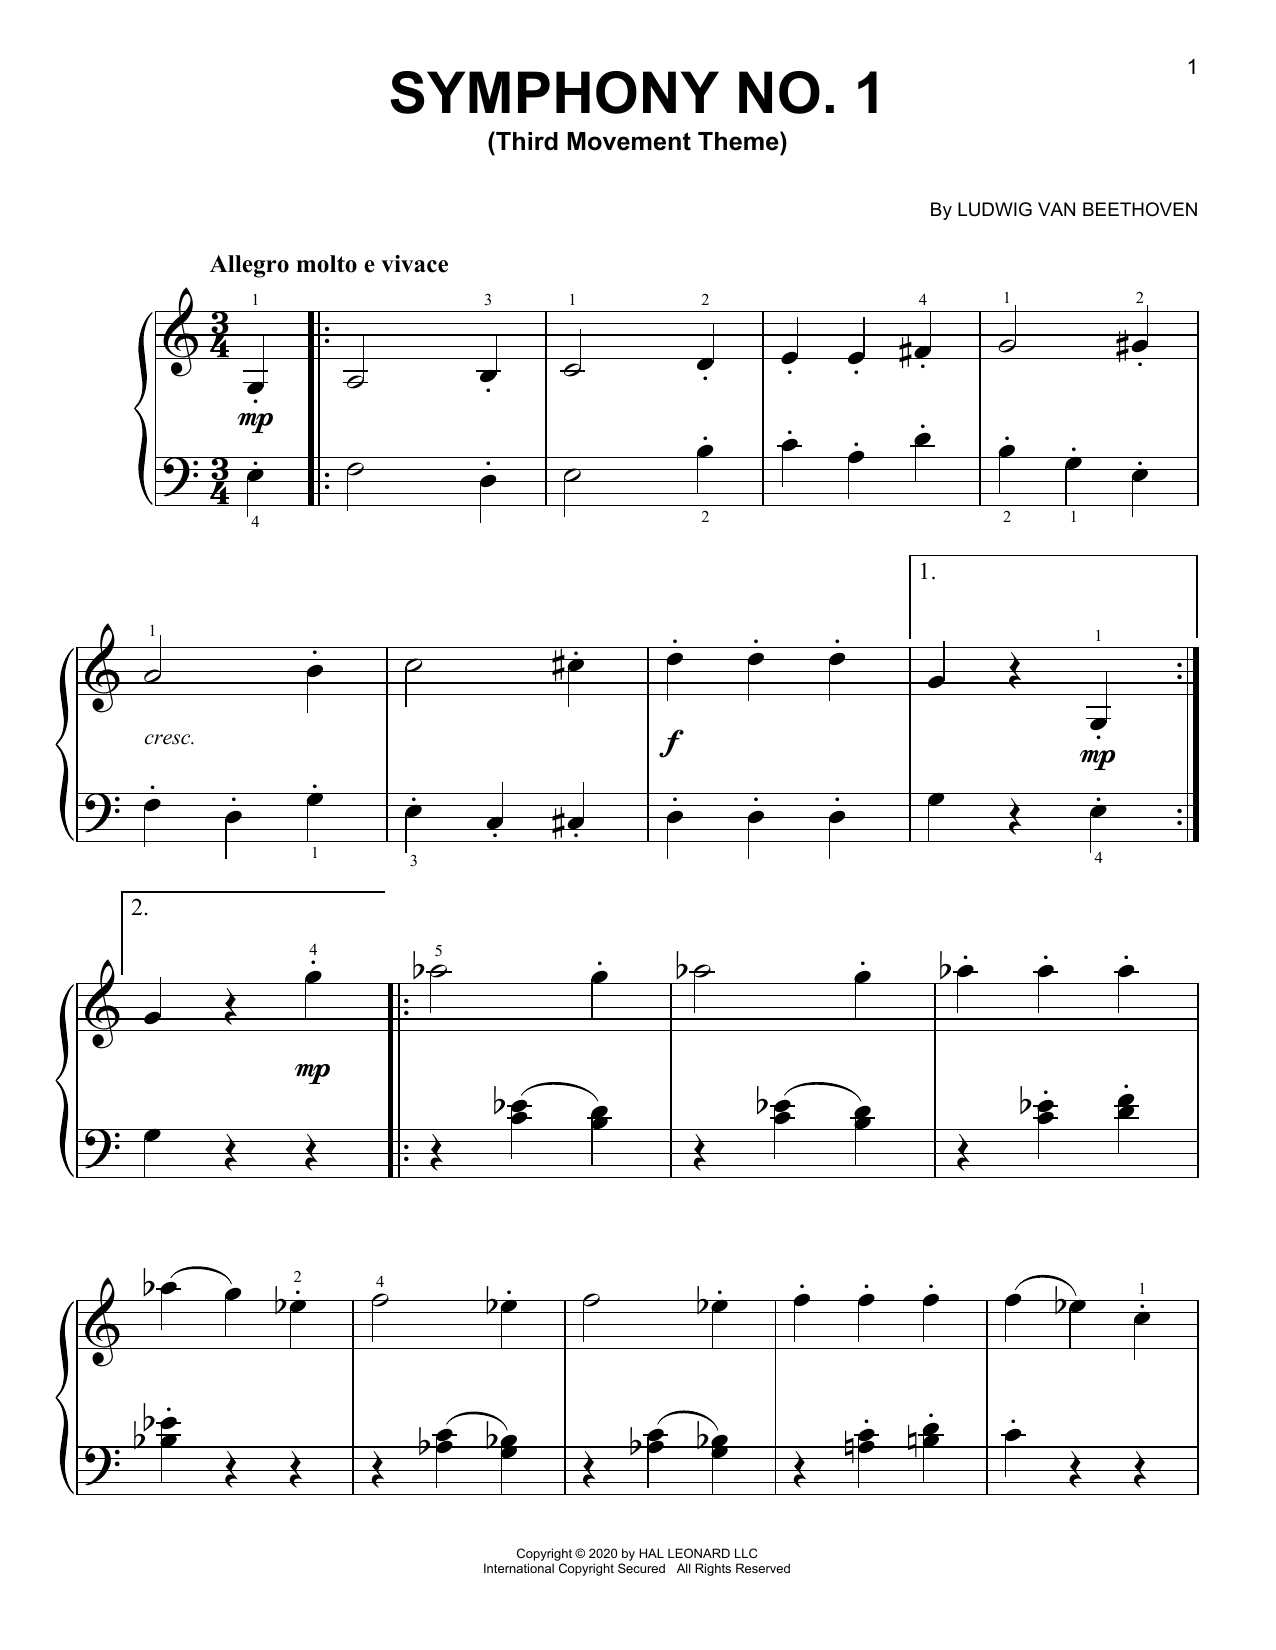 Symphony No. 1, Third Movement Excerpt (Easy Piano) von Ludwig van Beethoven